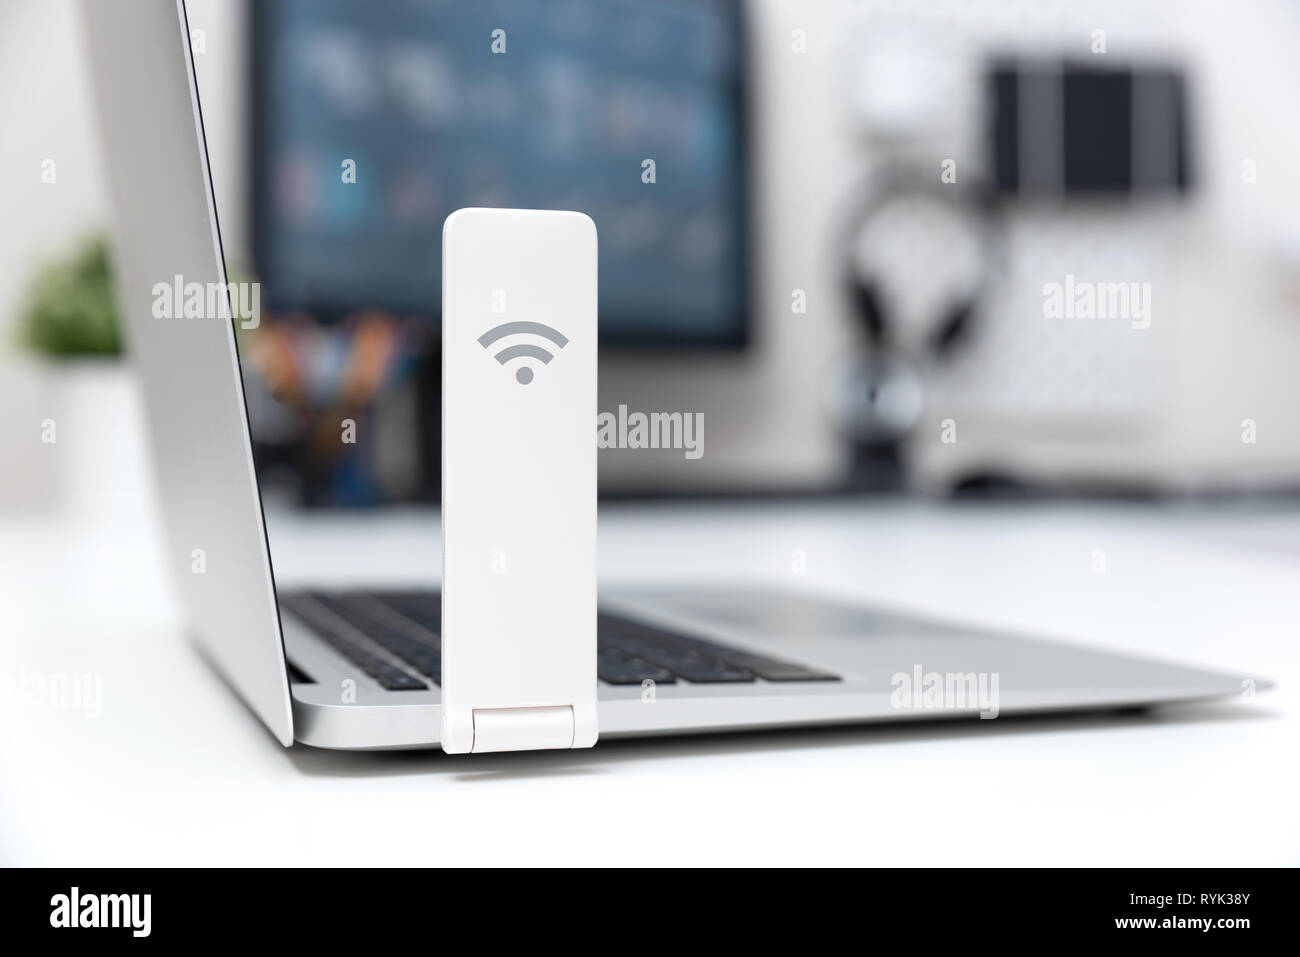 Accesso wireless a internet concetto. Rete mobile expander o mobile internet modem USB stick Foto Stock